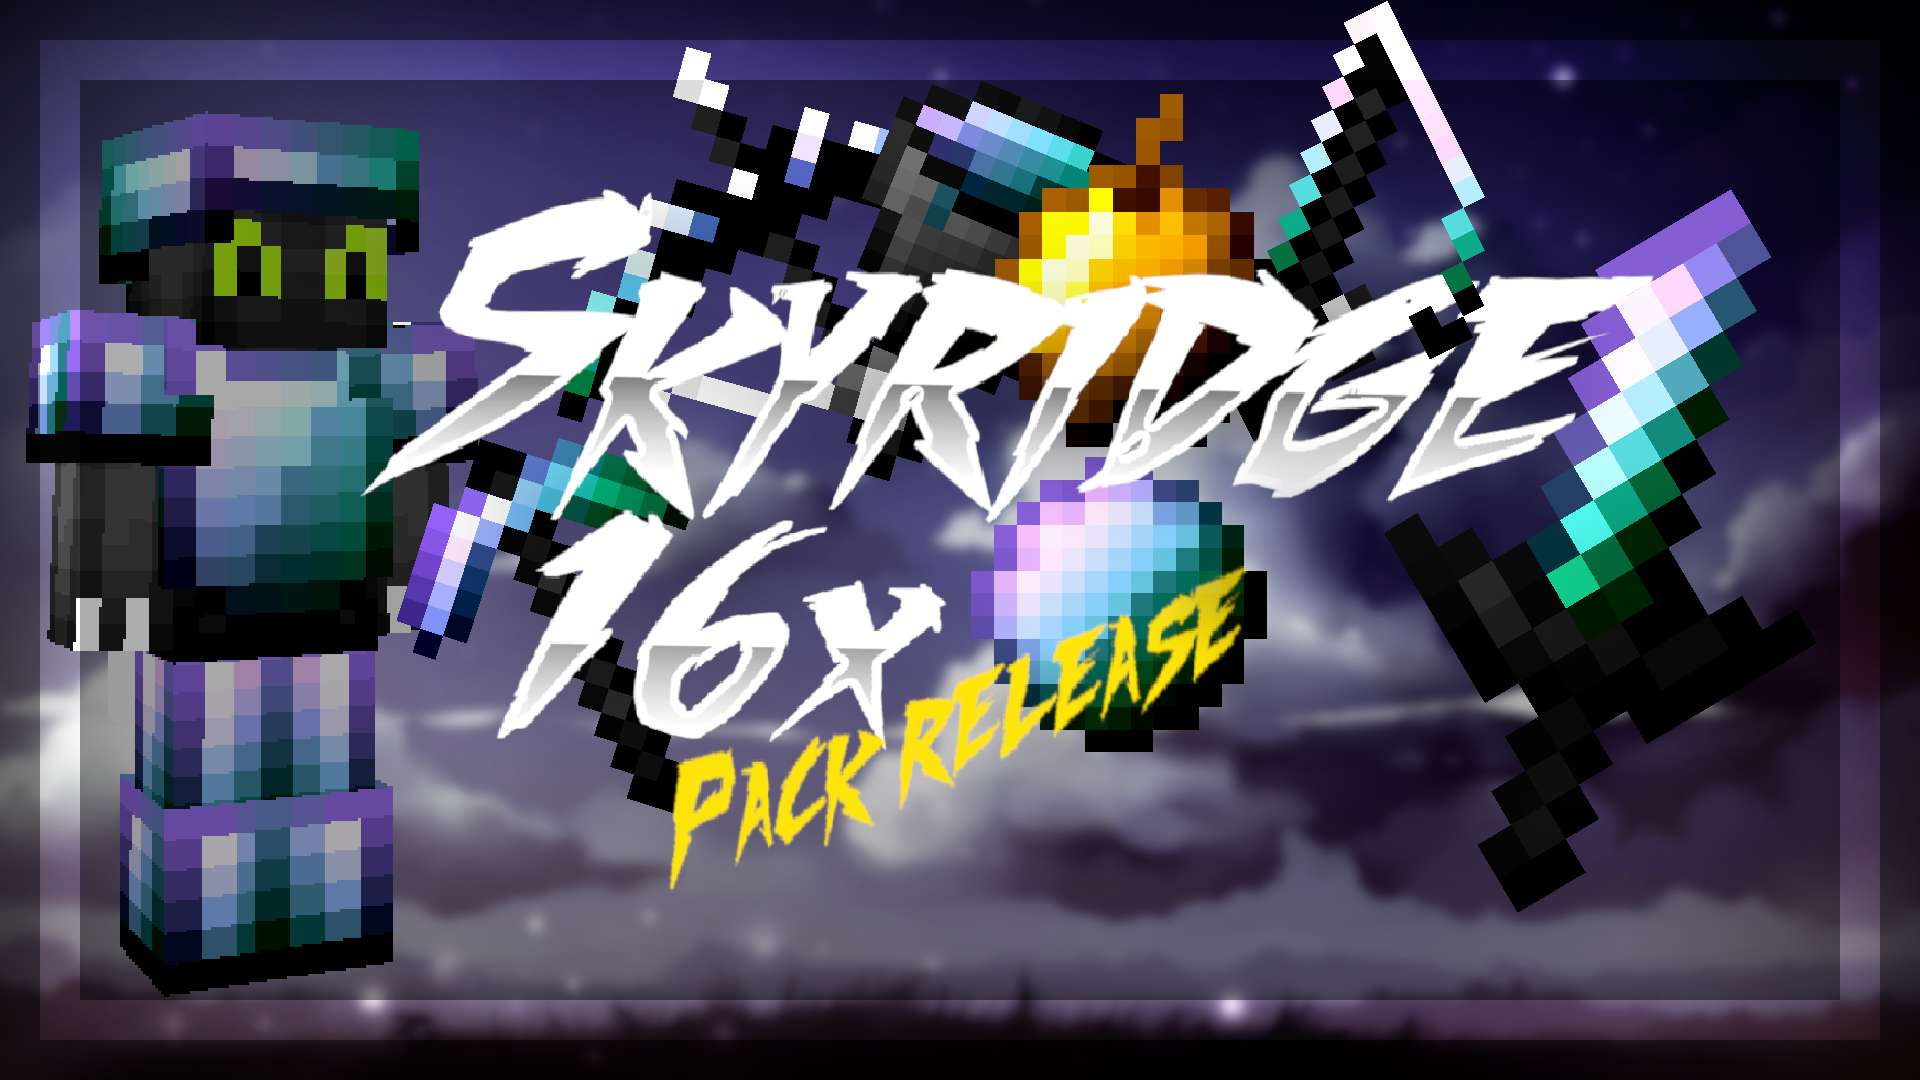 Skyridge 16x by MattePacks on PvPRP